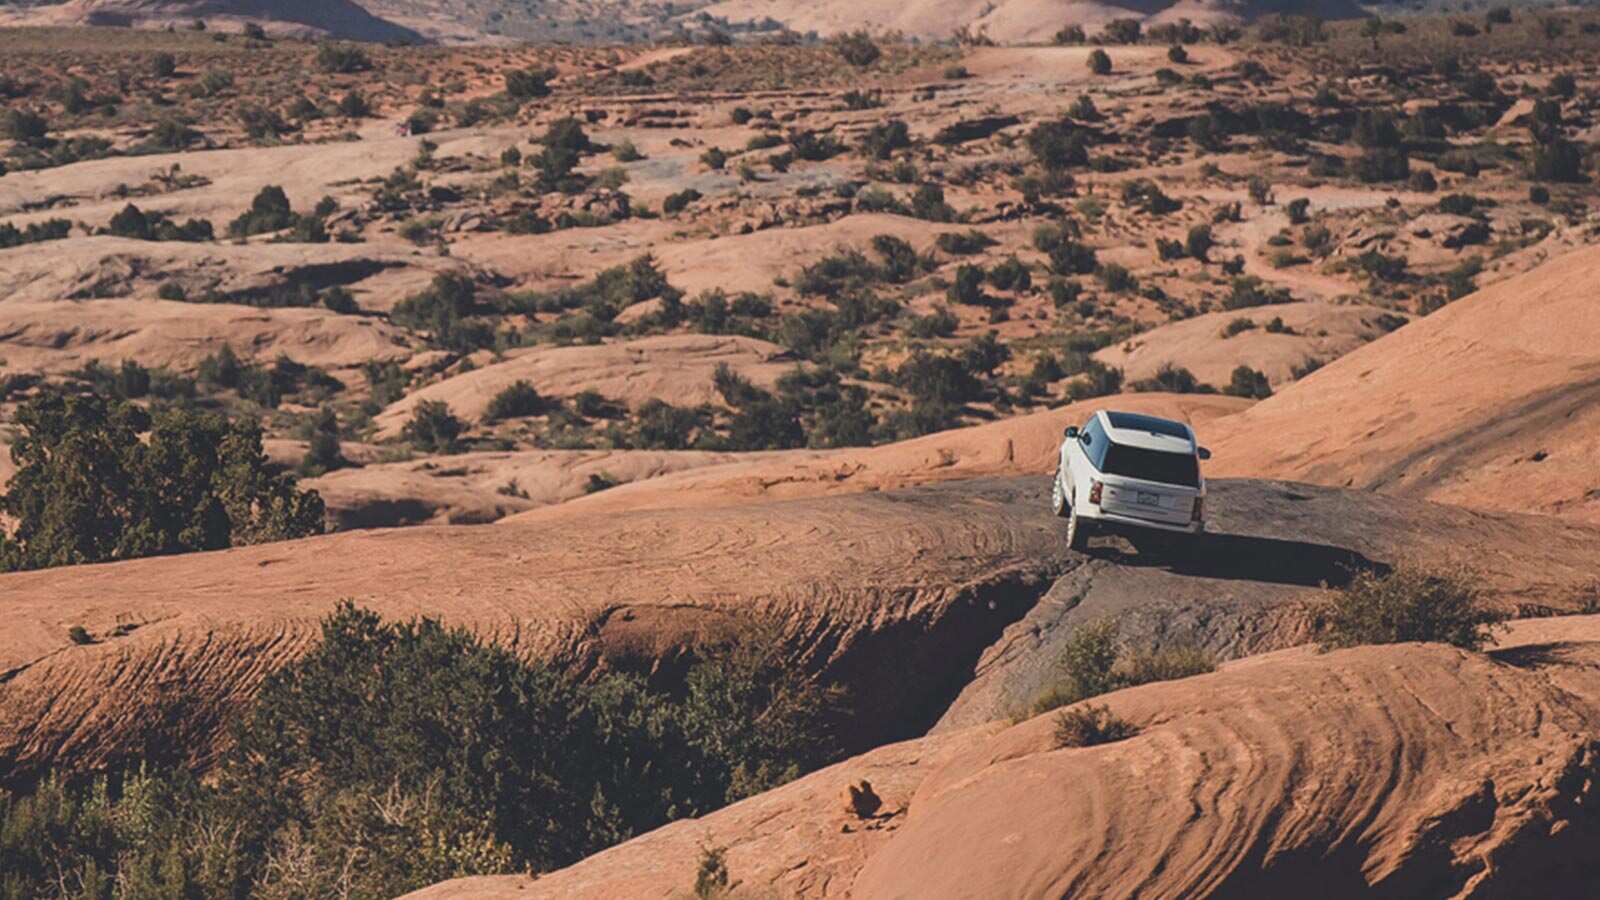 Range Rover driving on rocky terrain